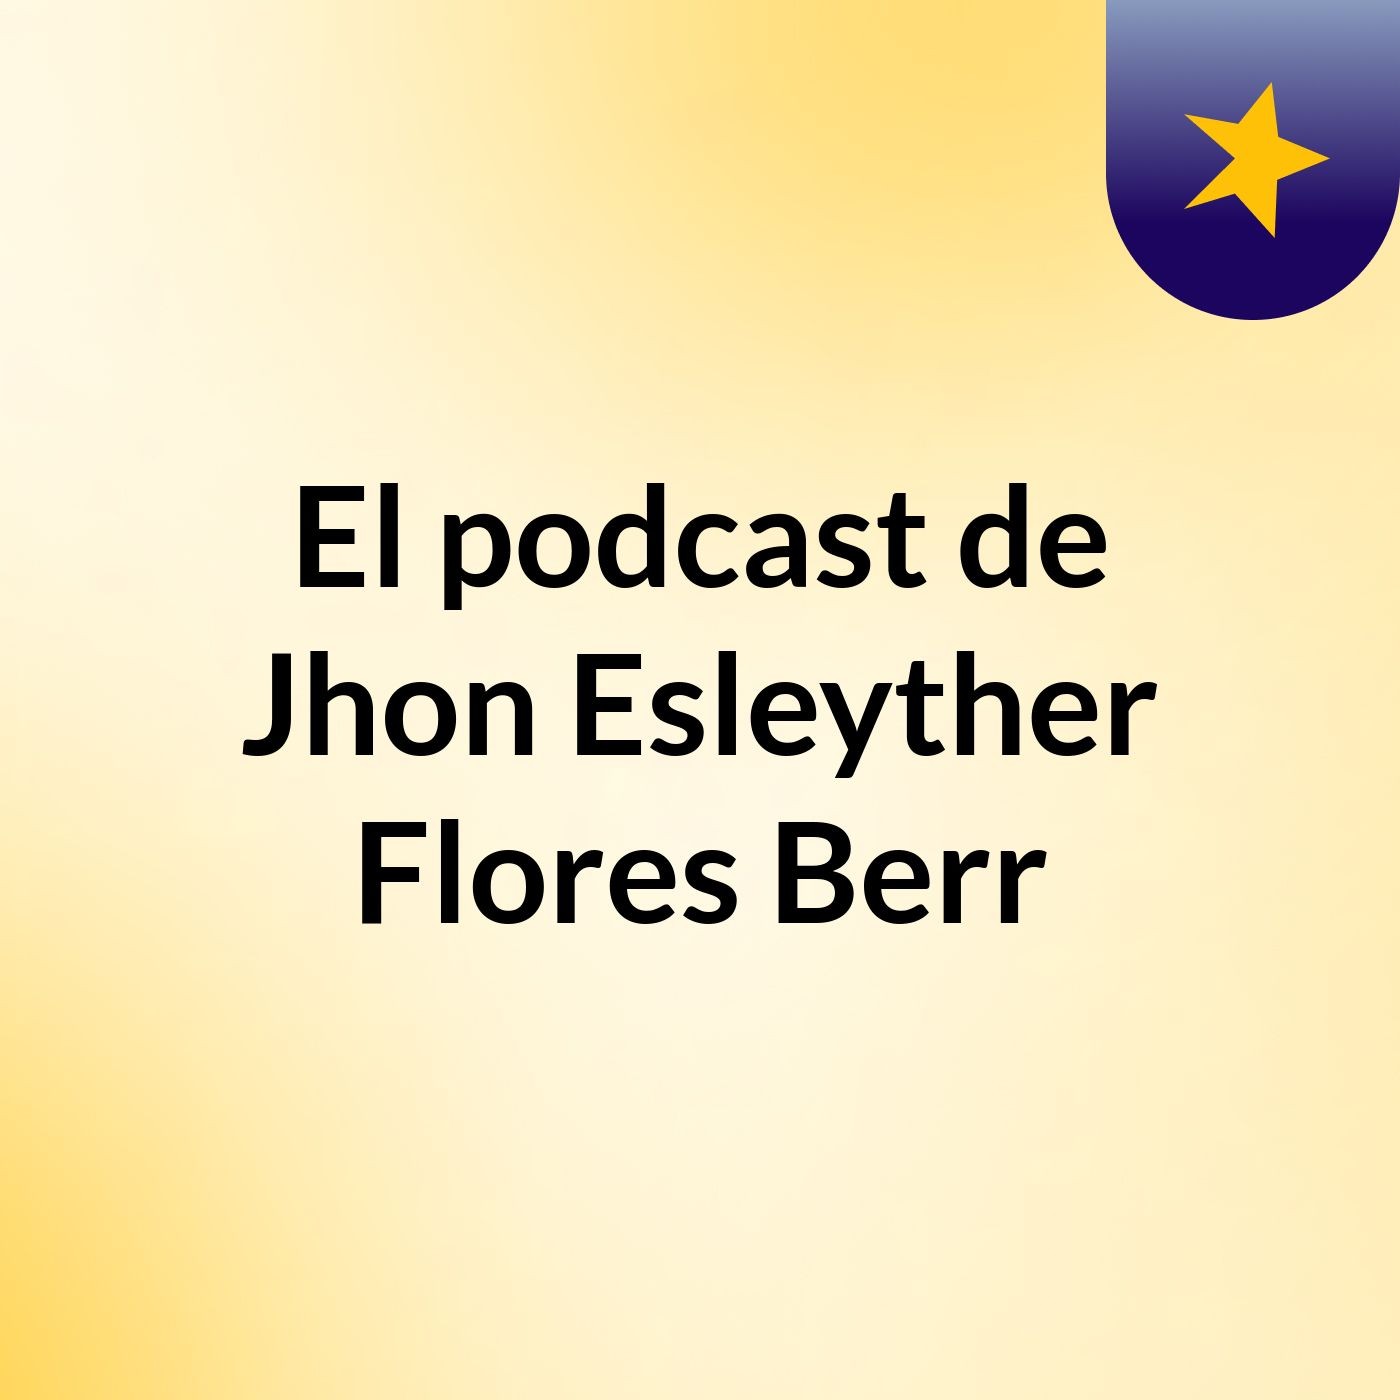 El podcast de Jhon Esleyther Flores Berr